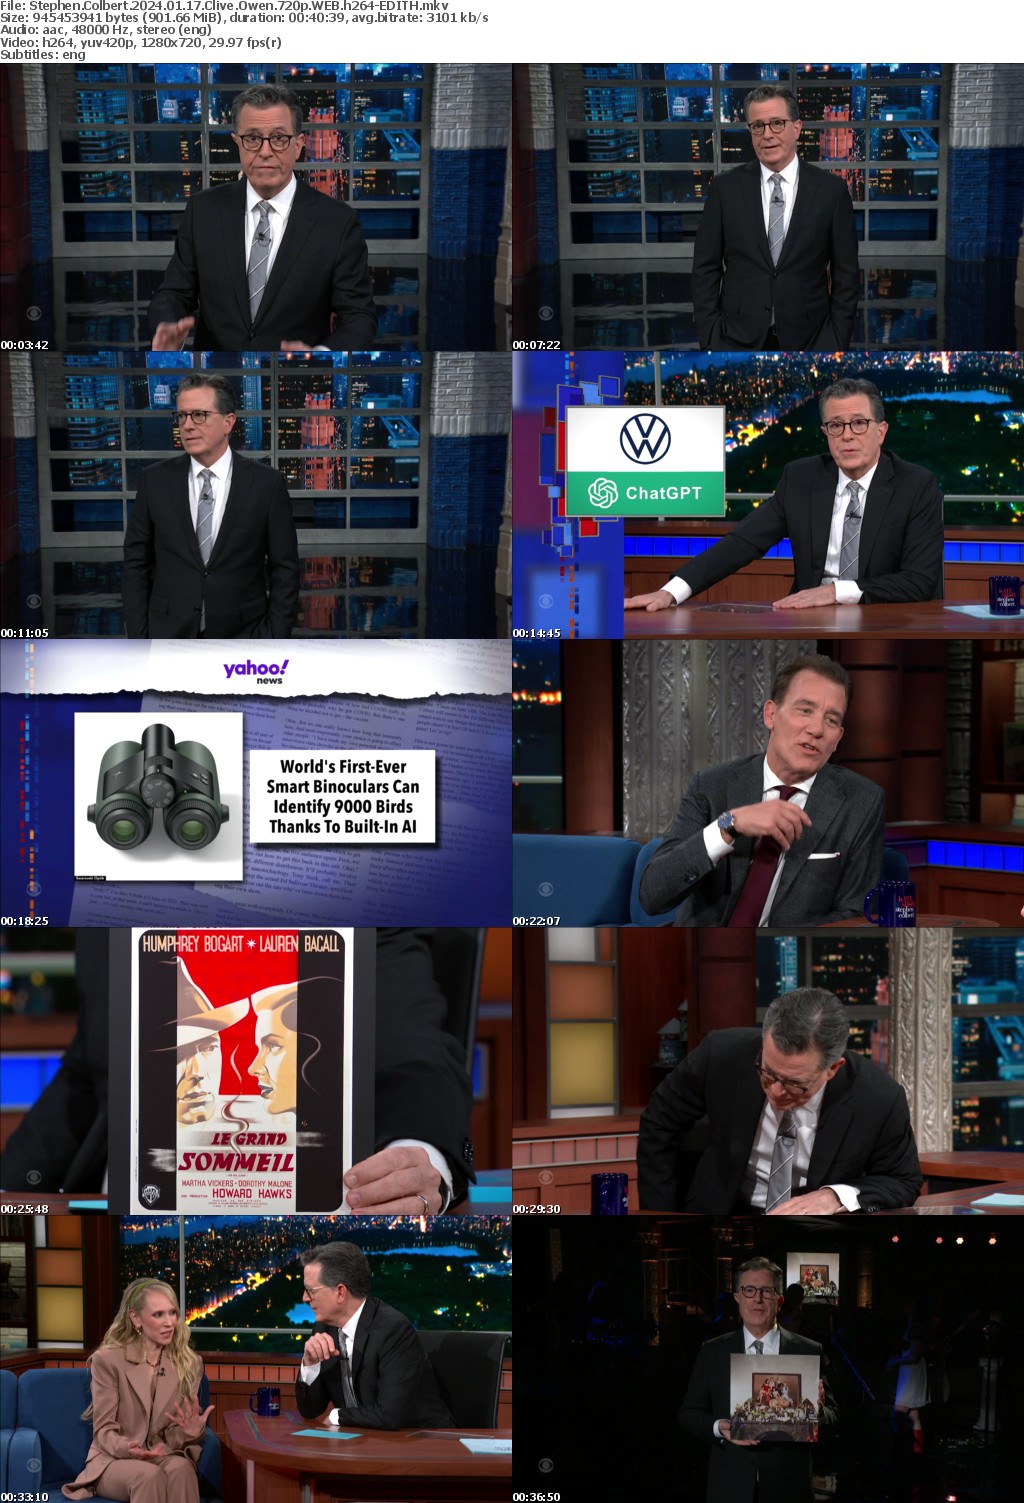 Stephen Colbert 2024 01 17 Clive Owen 720p WEB h264-EDITH